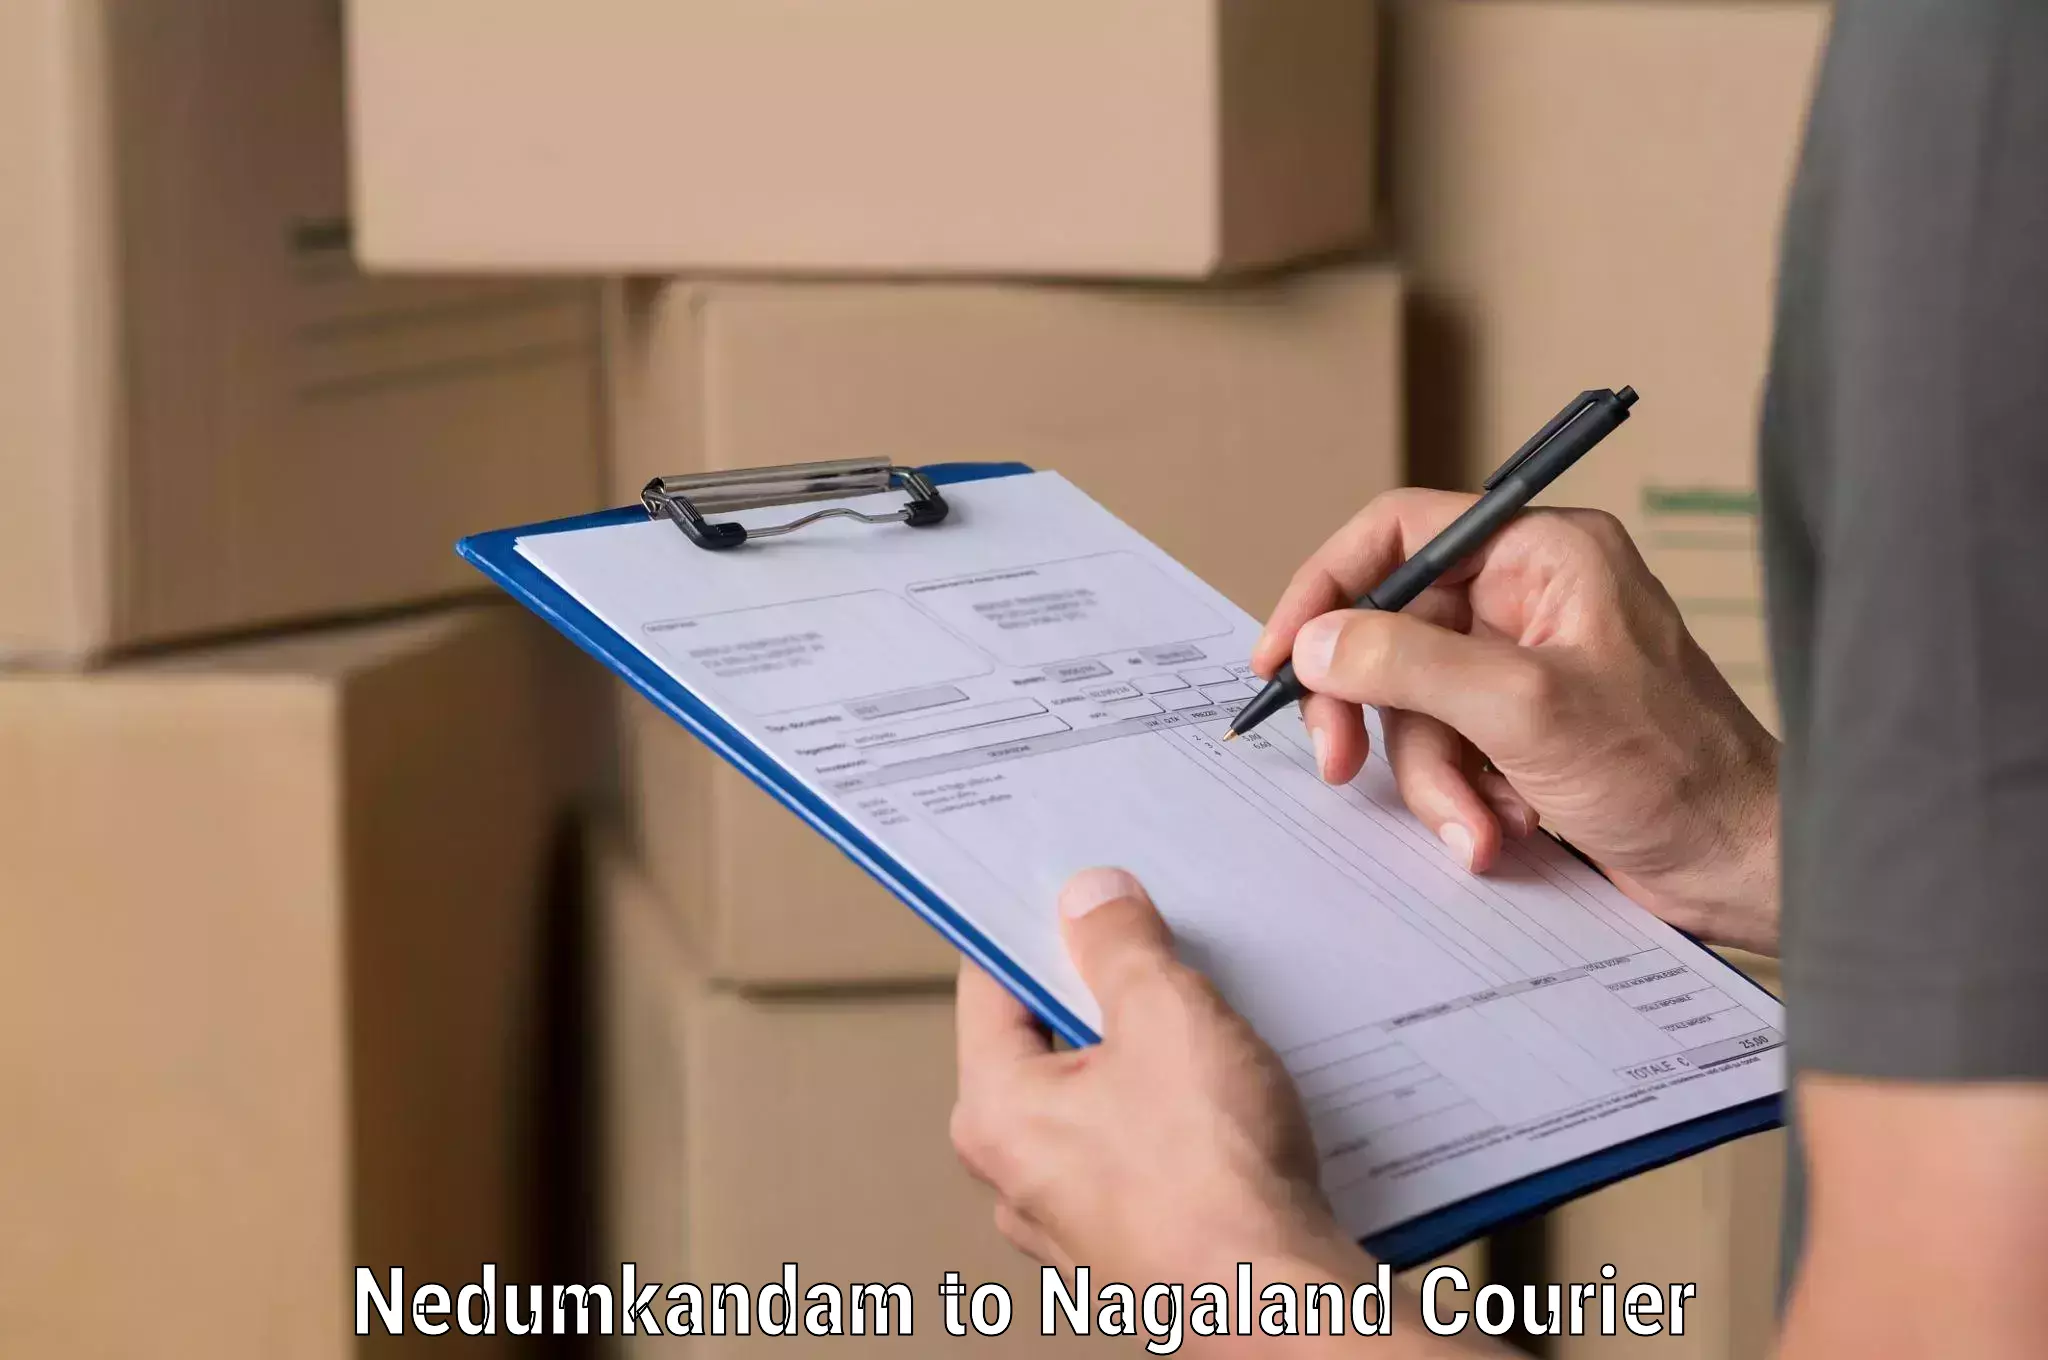 Courier service innovation Nedumkandam to NIT Nagaland